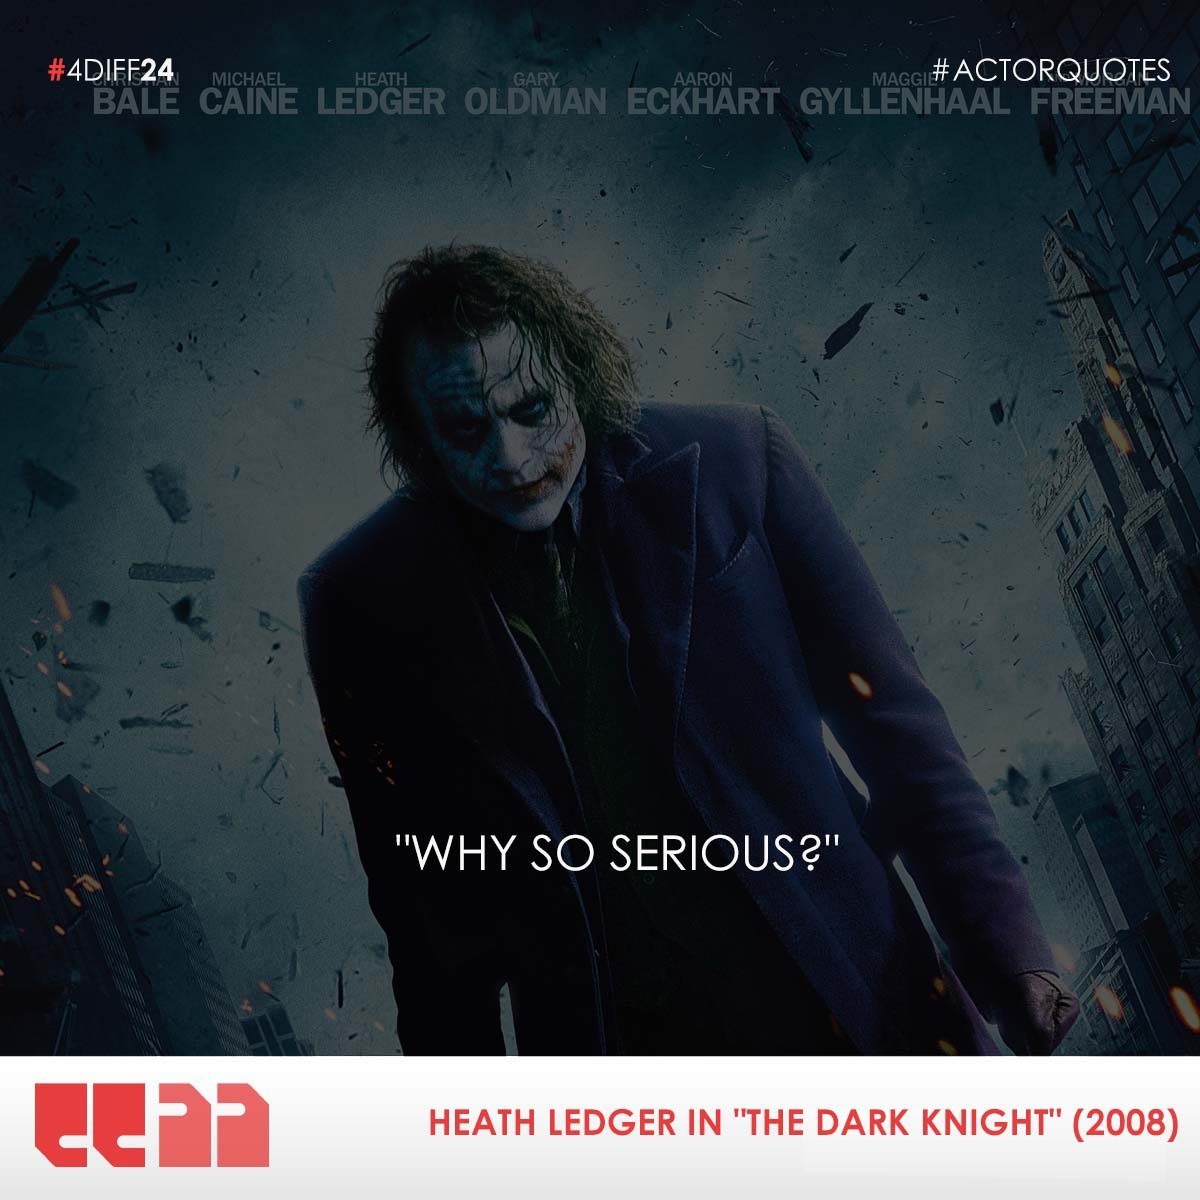 #fdiff #fdiff24 #actorquotes #quotes

'Why so serious?' - Heath Ledger